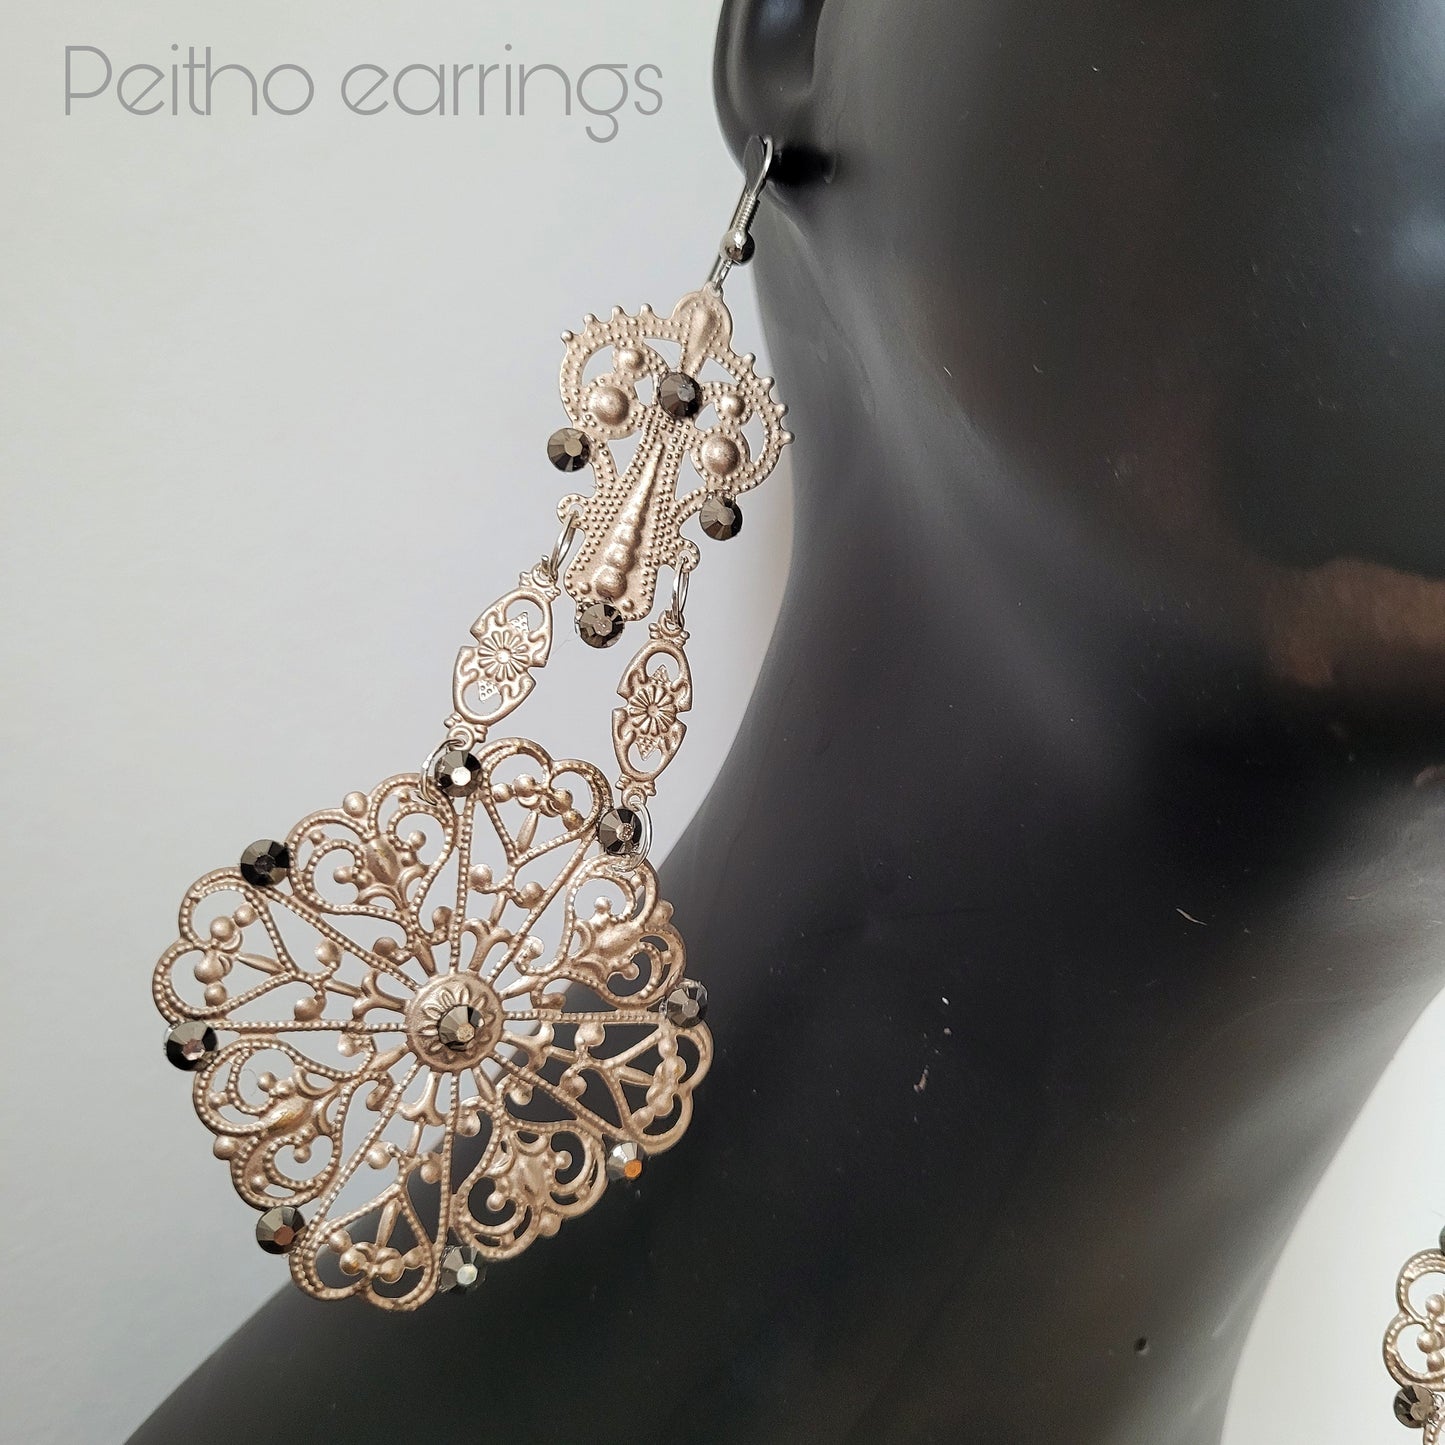 Deusa ex Machina collection: The Peitho earrings